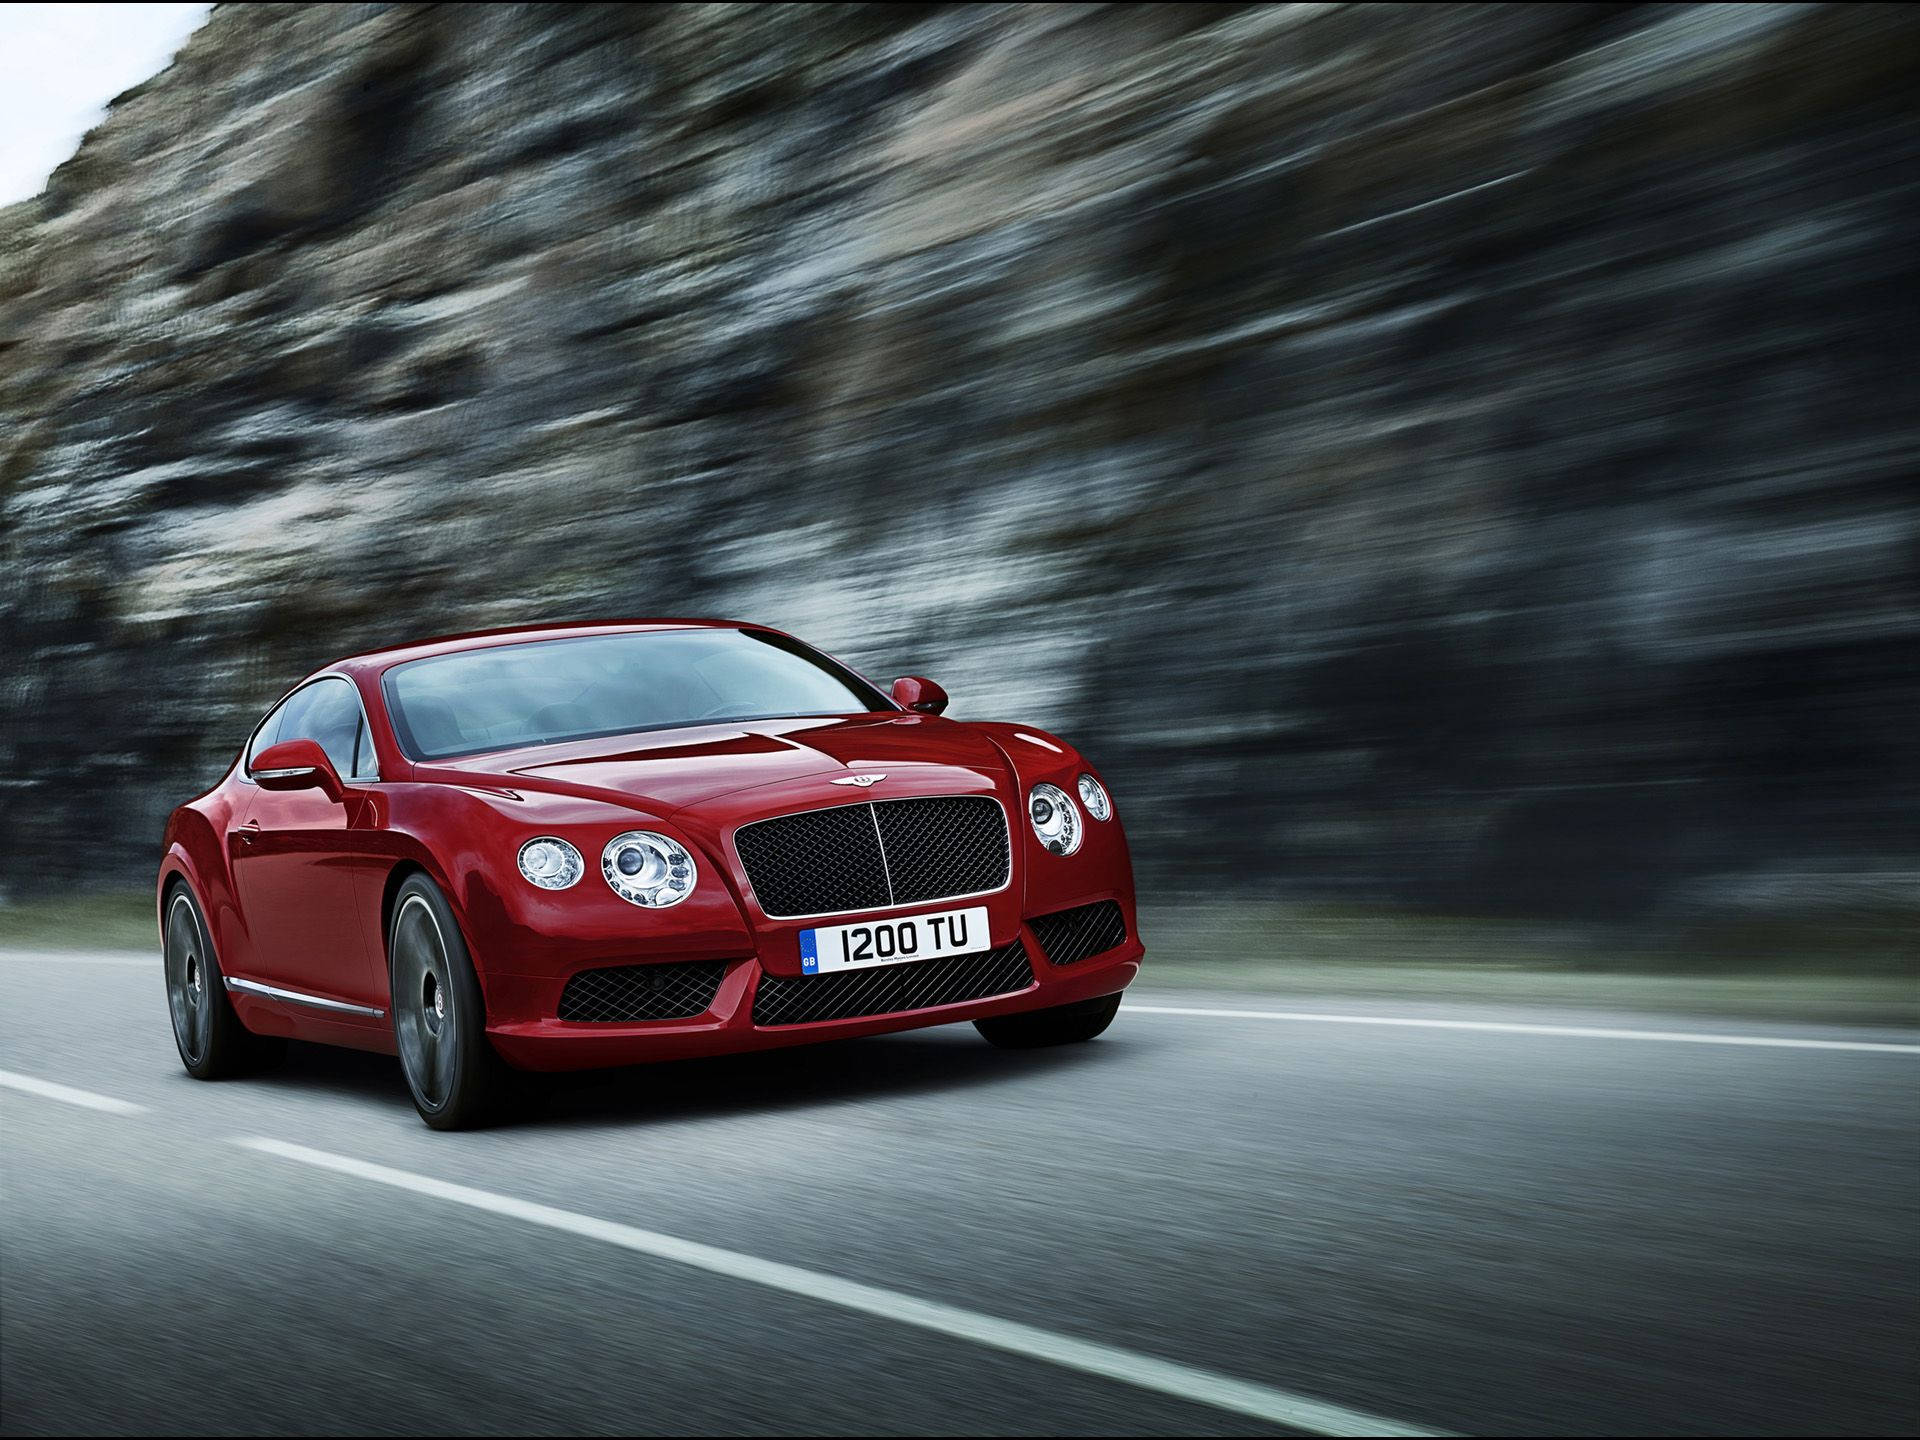 Red Bentley Speeding On The Road Wallpaper